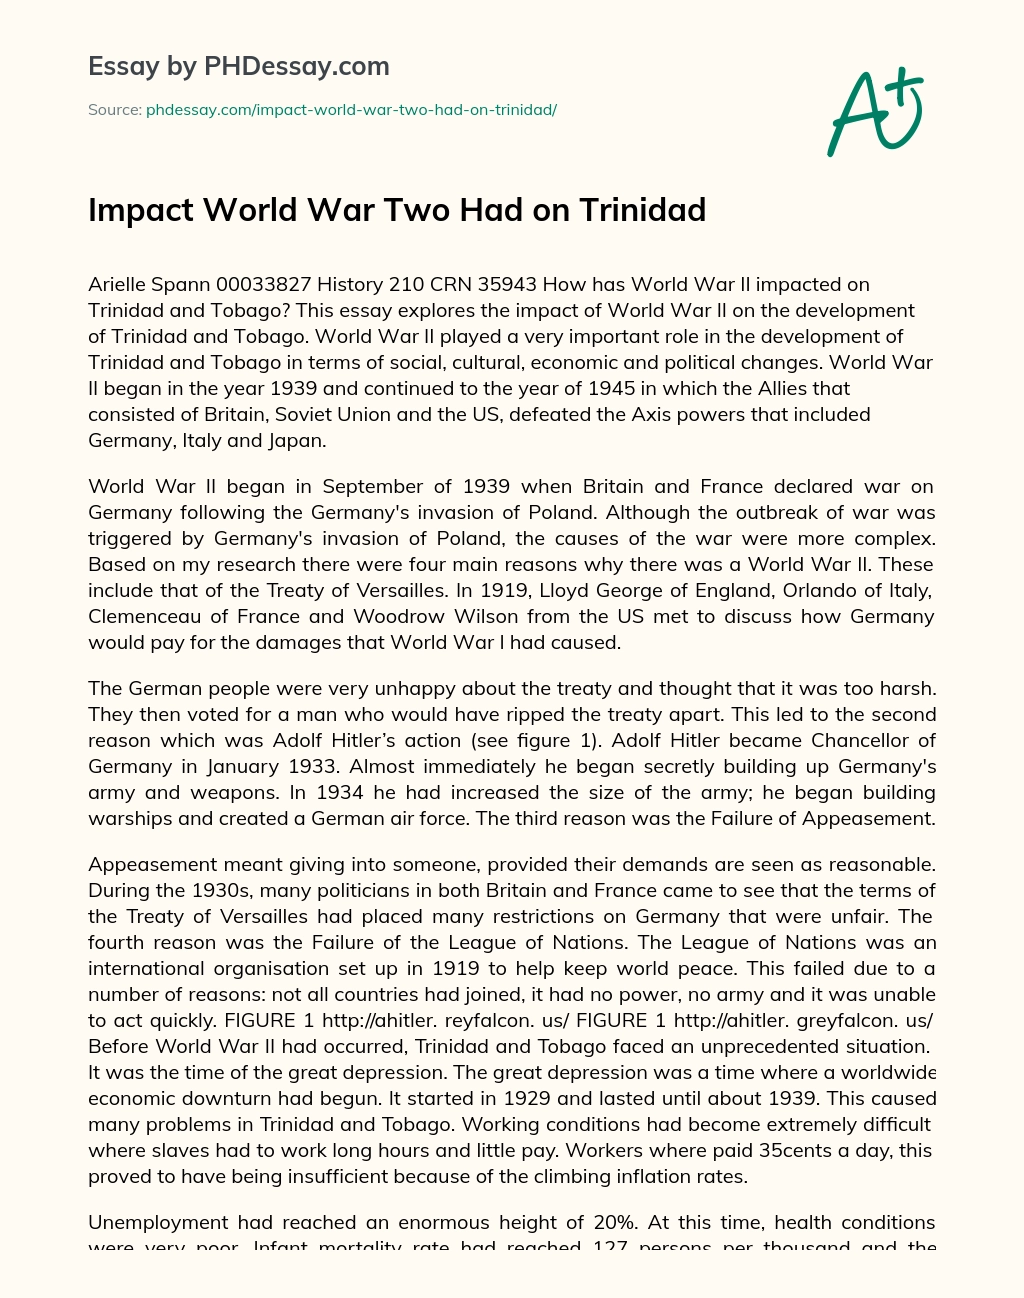 Impact World War Two Had on Trinidad essay